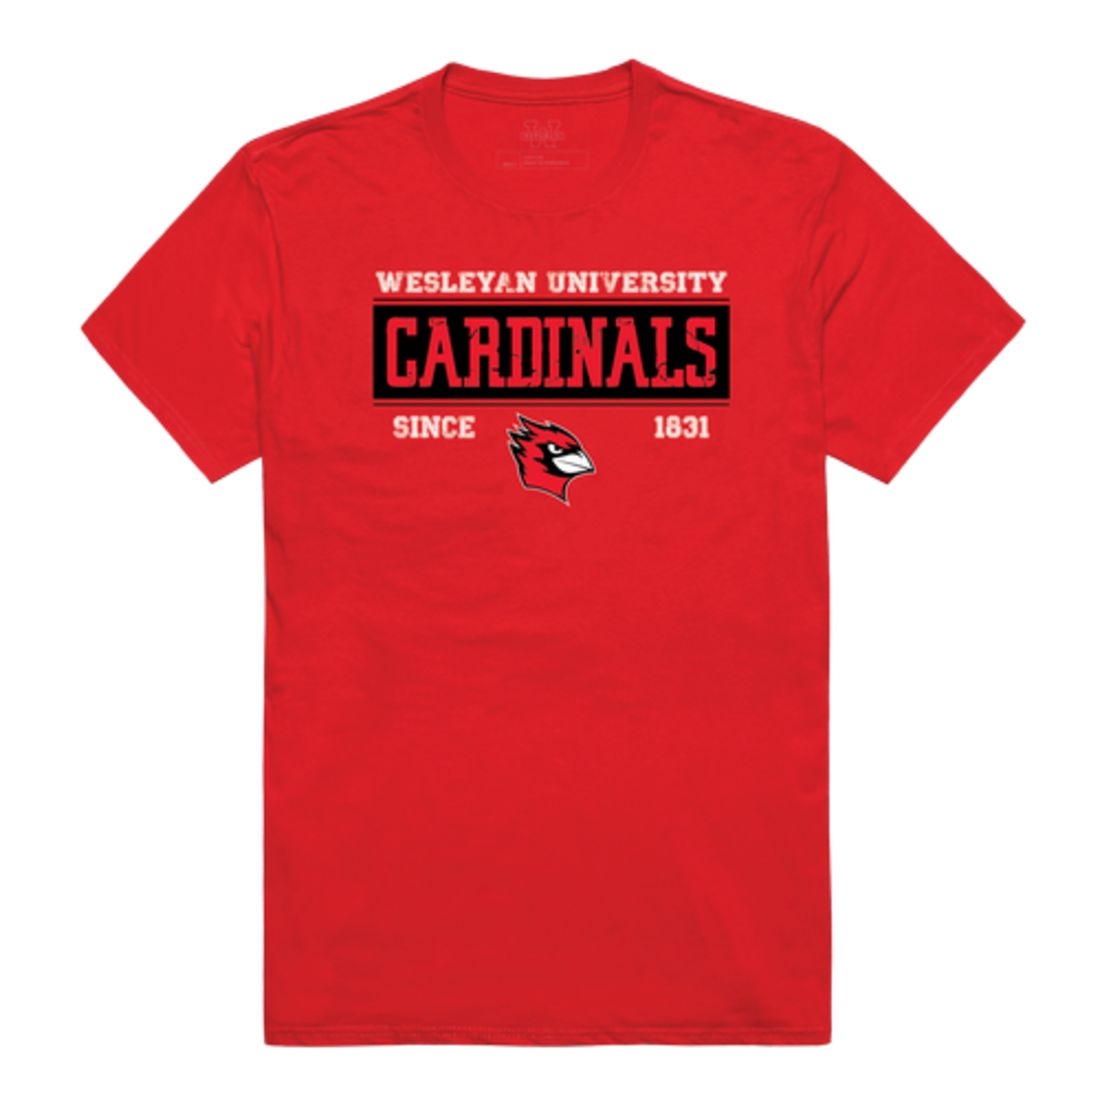 Wesleyan University Cardinals Established T-Shirt